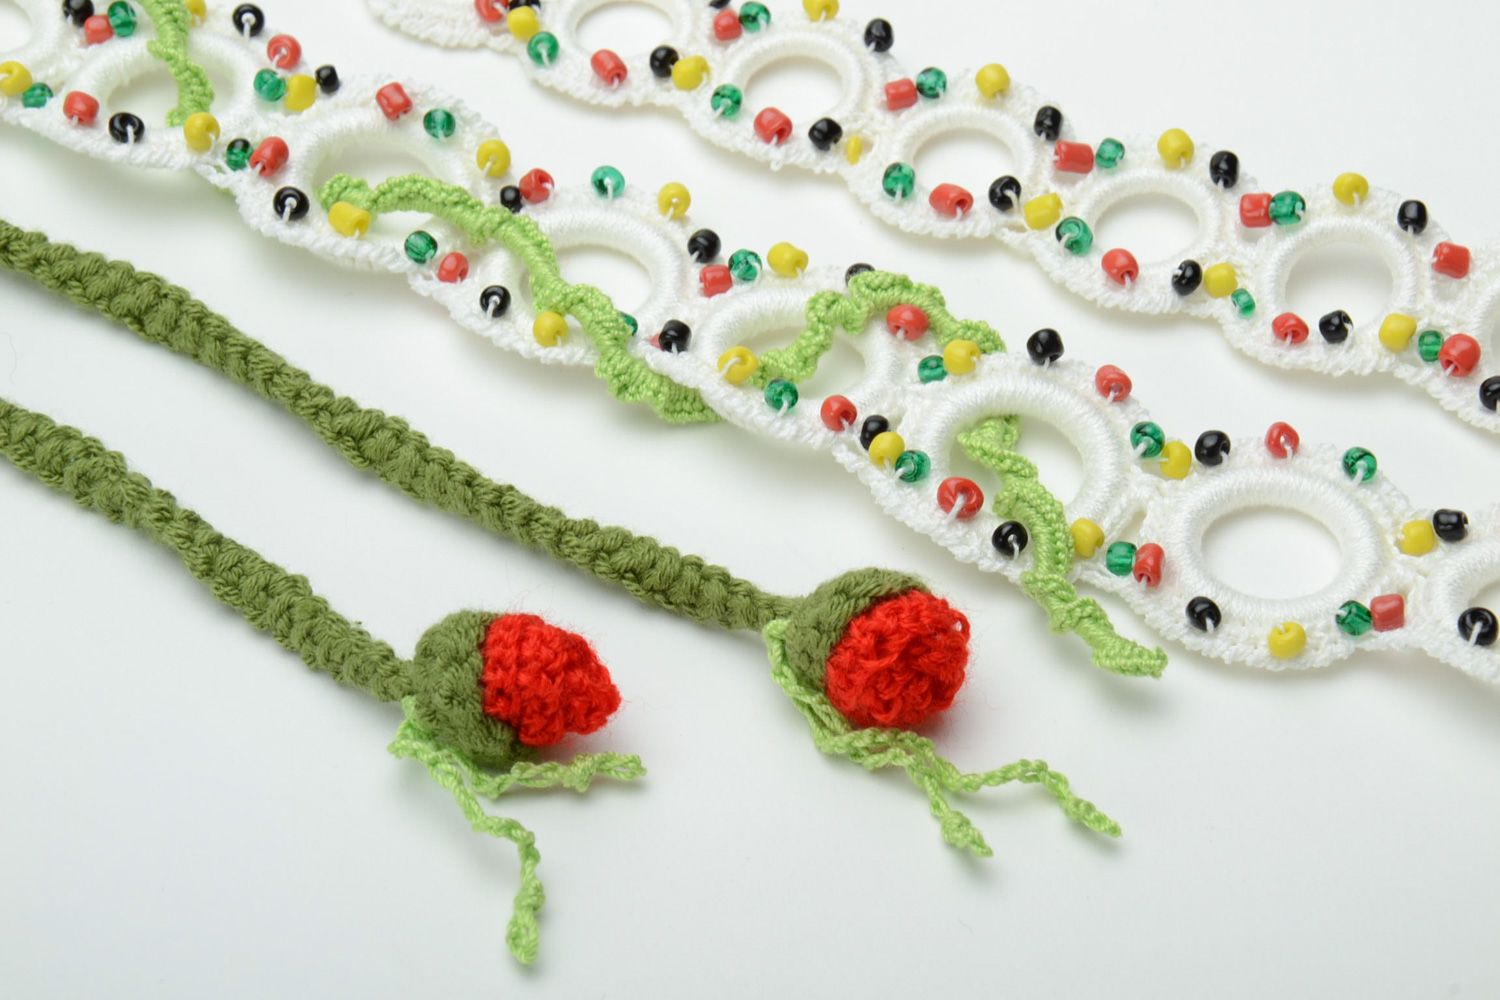 Homemade crochet acrylic and cotton flower belt for women photo 5